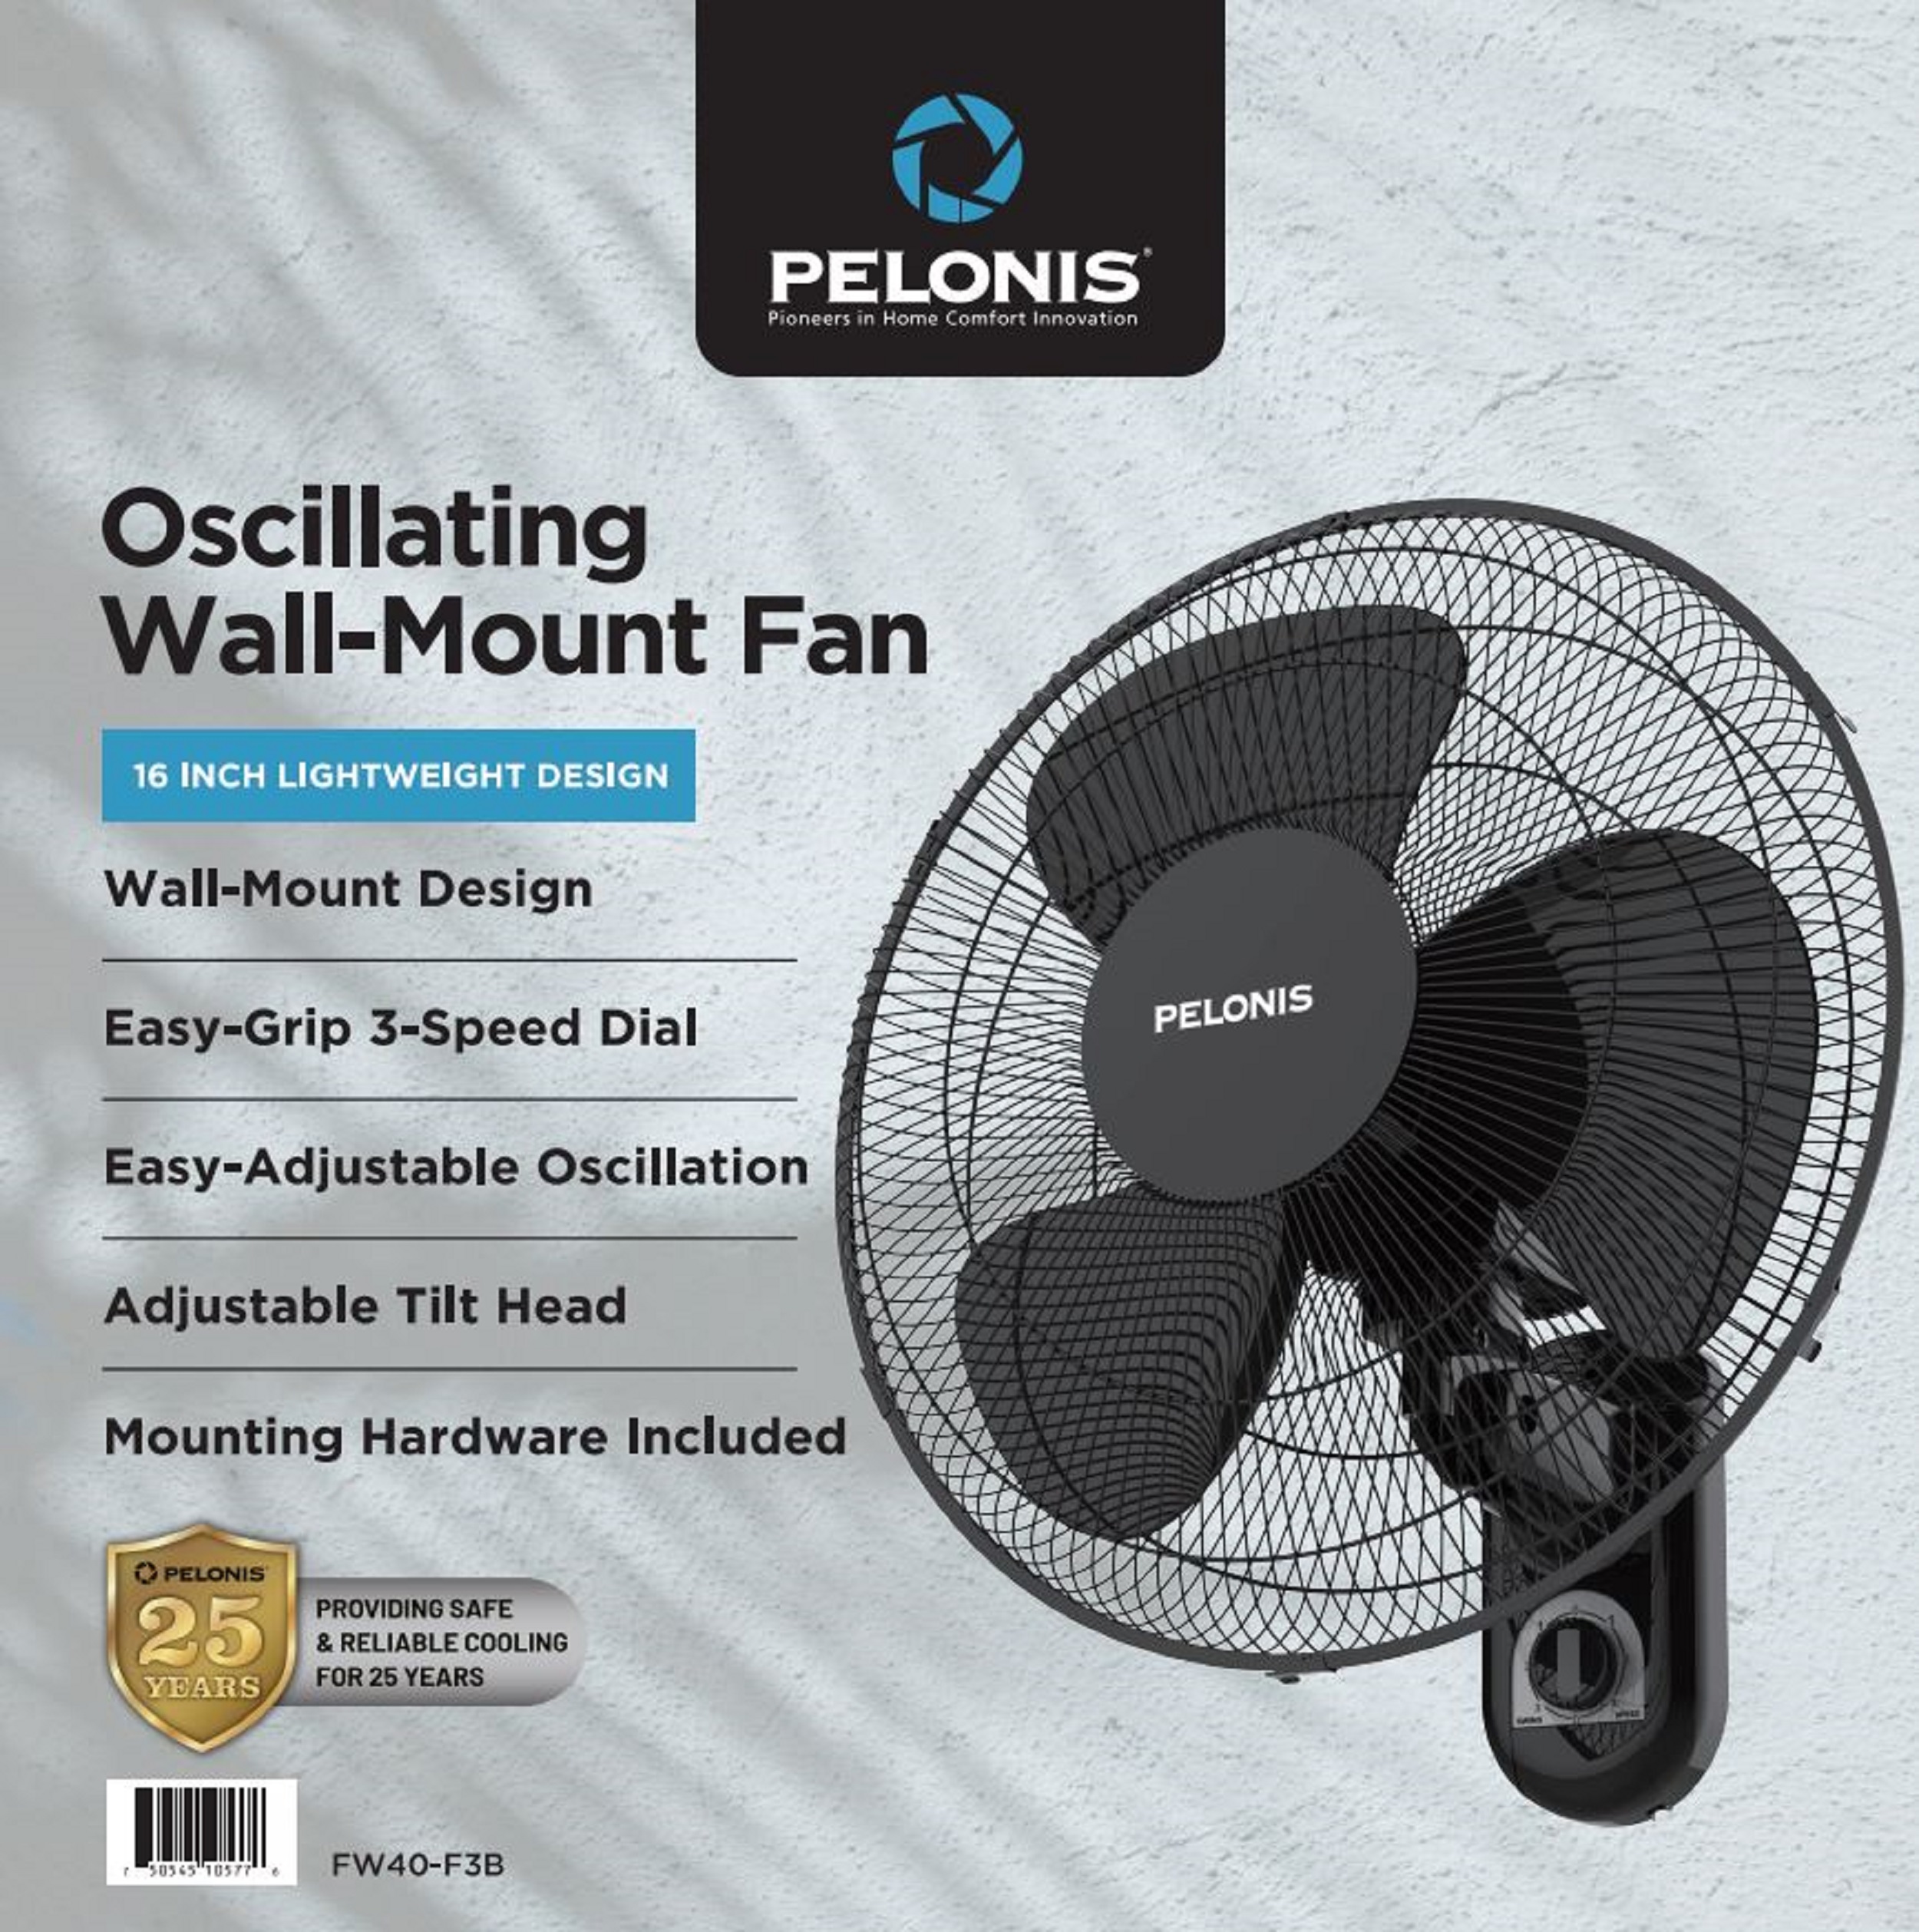 Pelonis 16" 3-Speed Oscillating Wall Mount Fan, FW40-F3B, New, Black - image 3 of 7